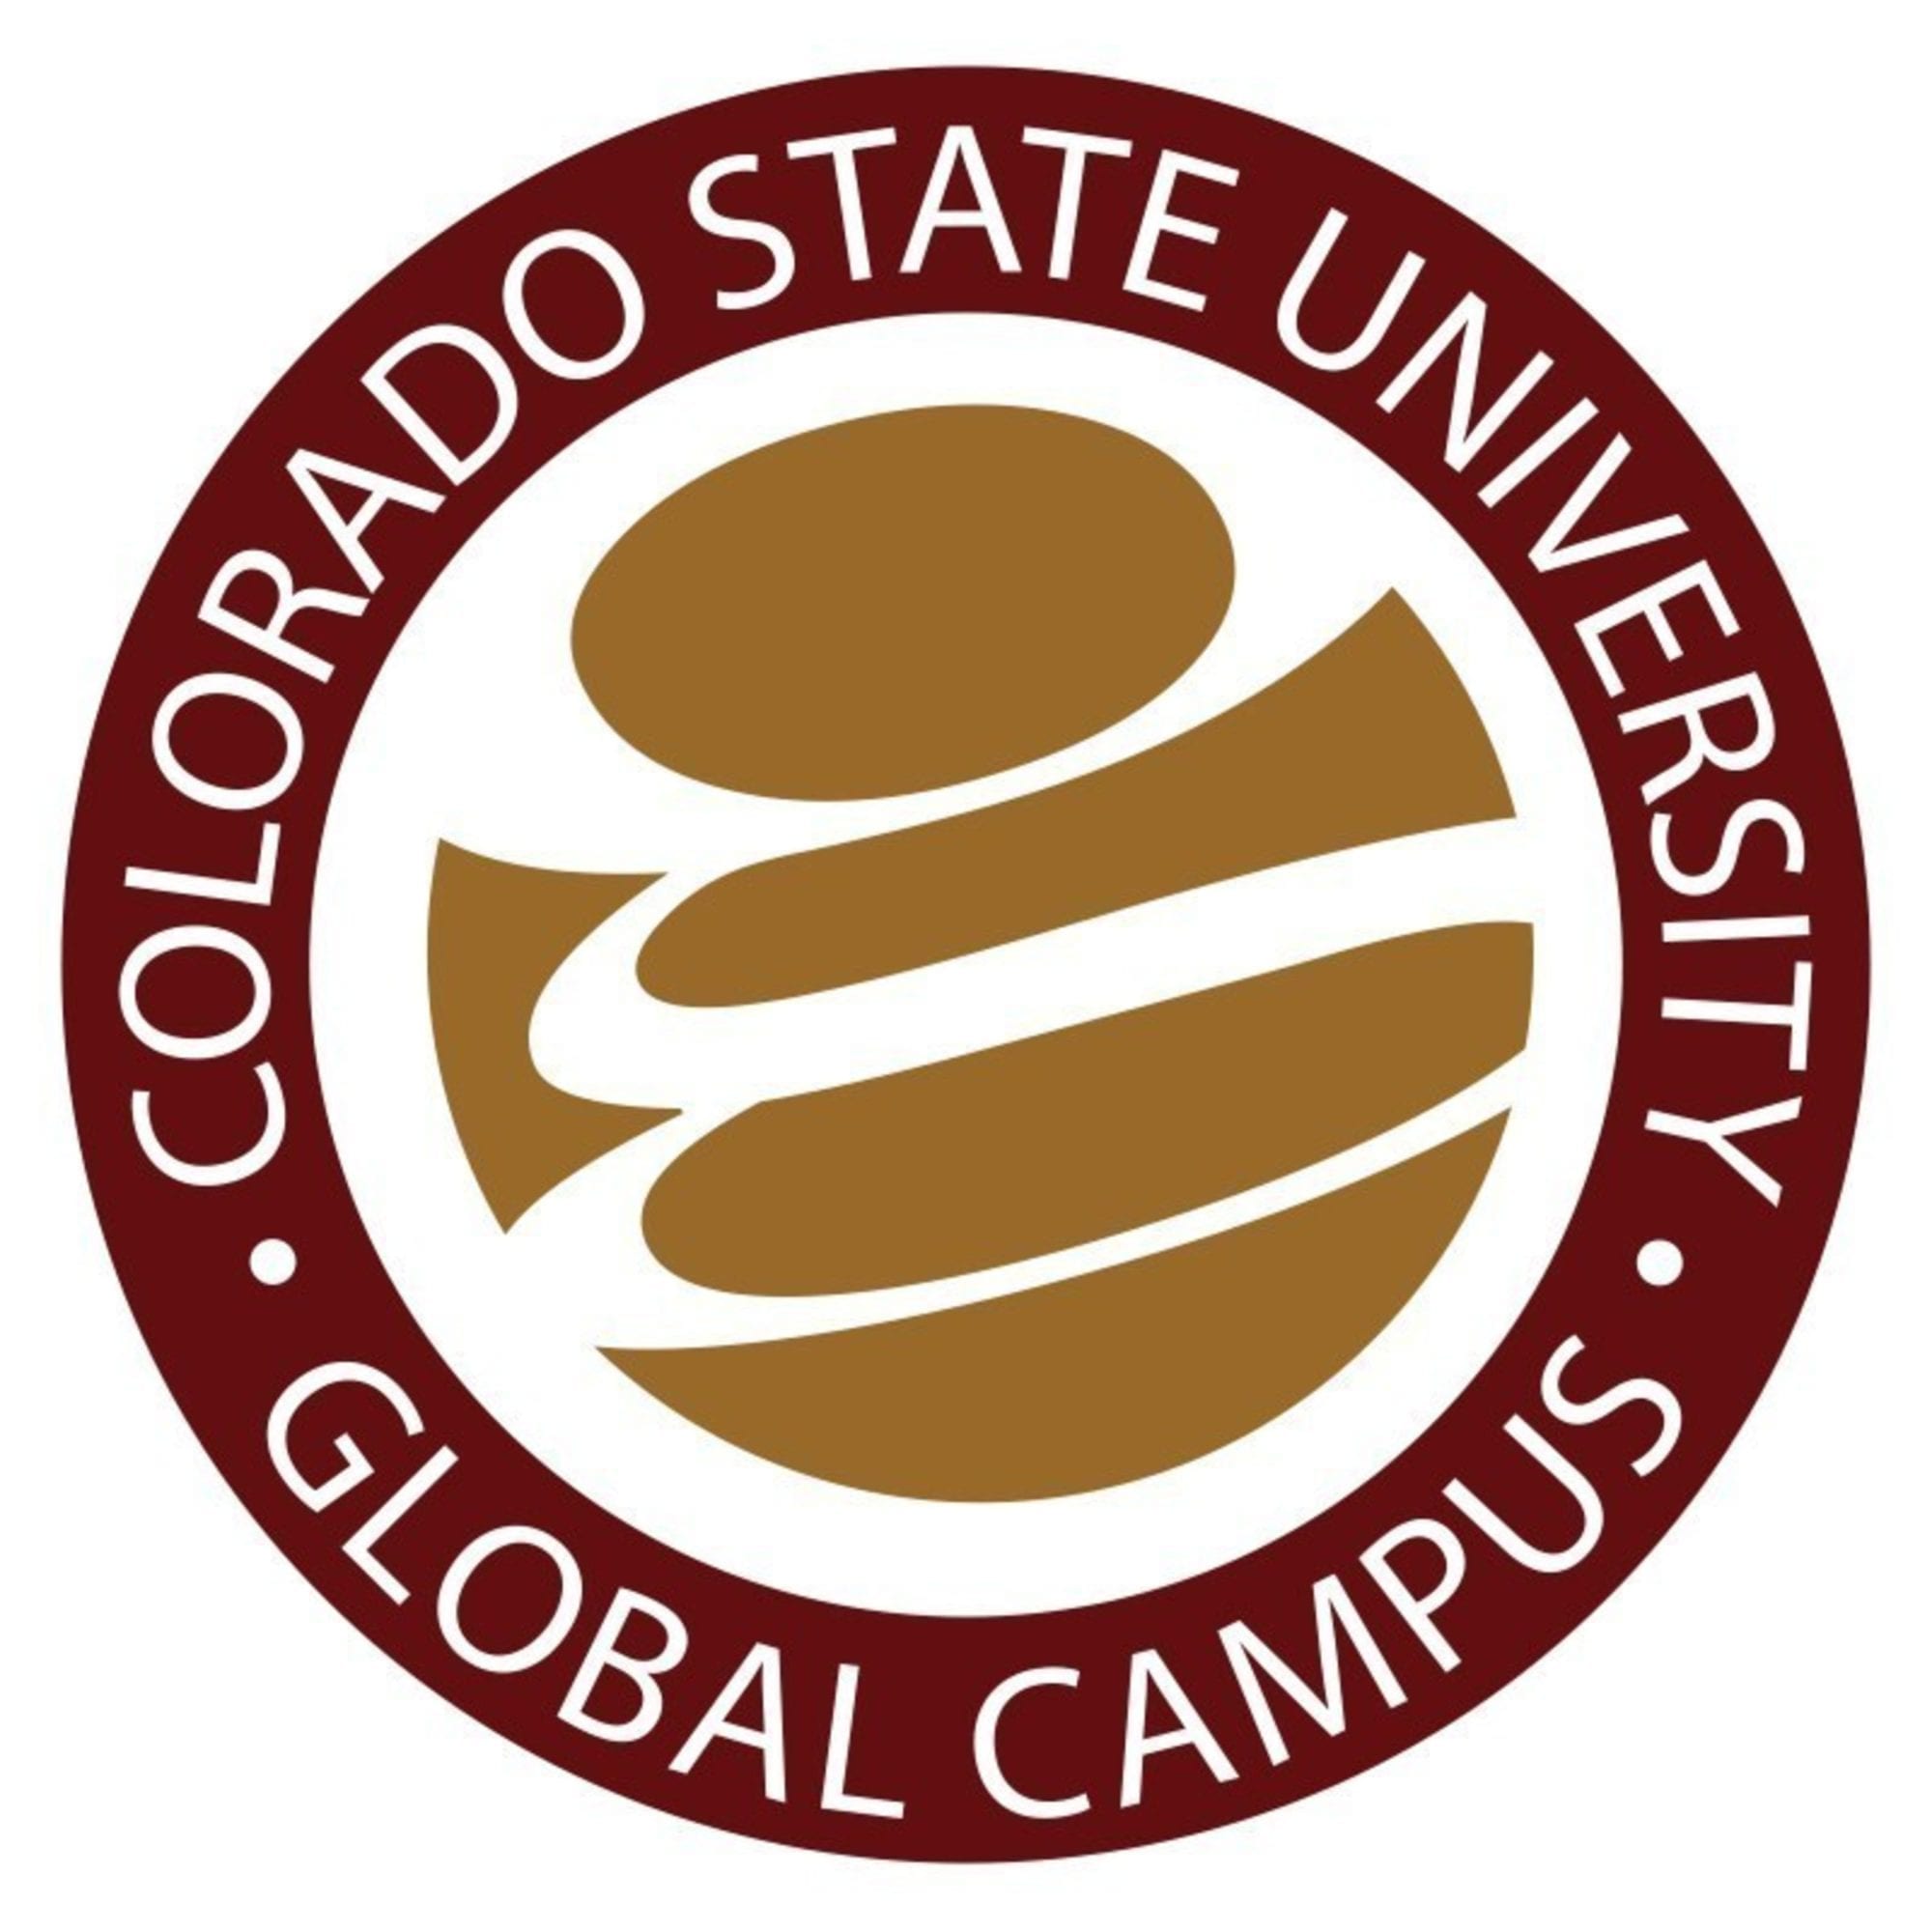 Colorado State University Global
Human Resources Degree